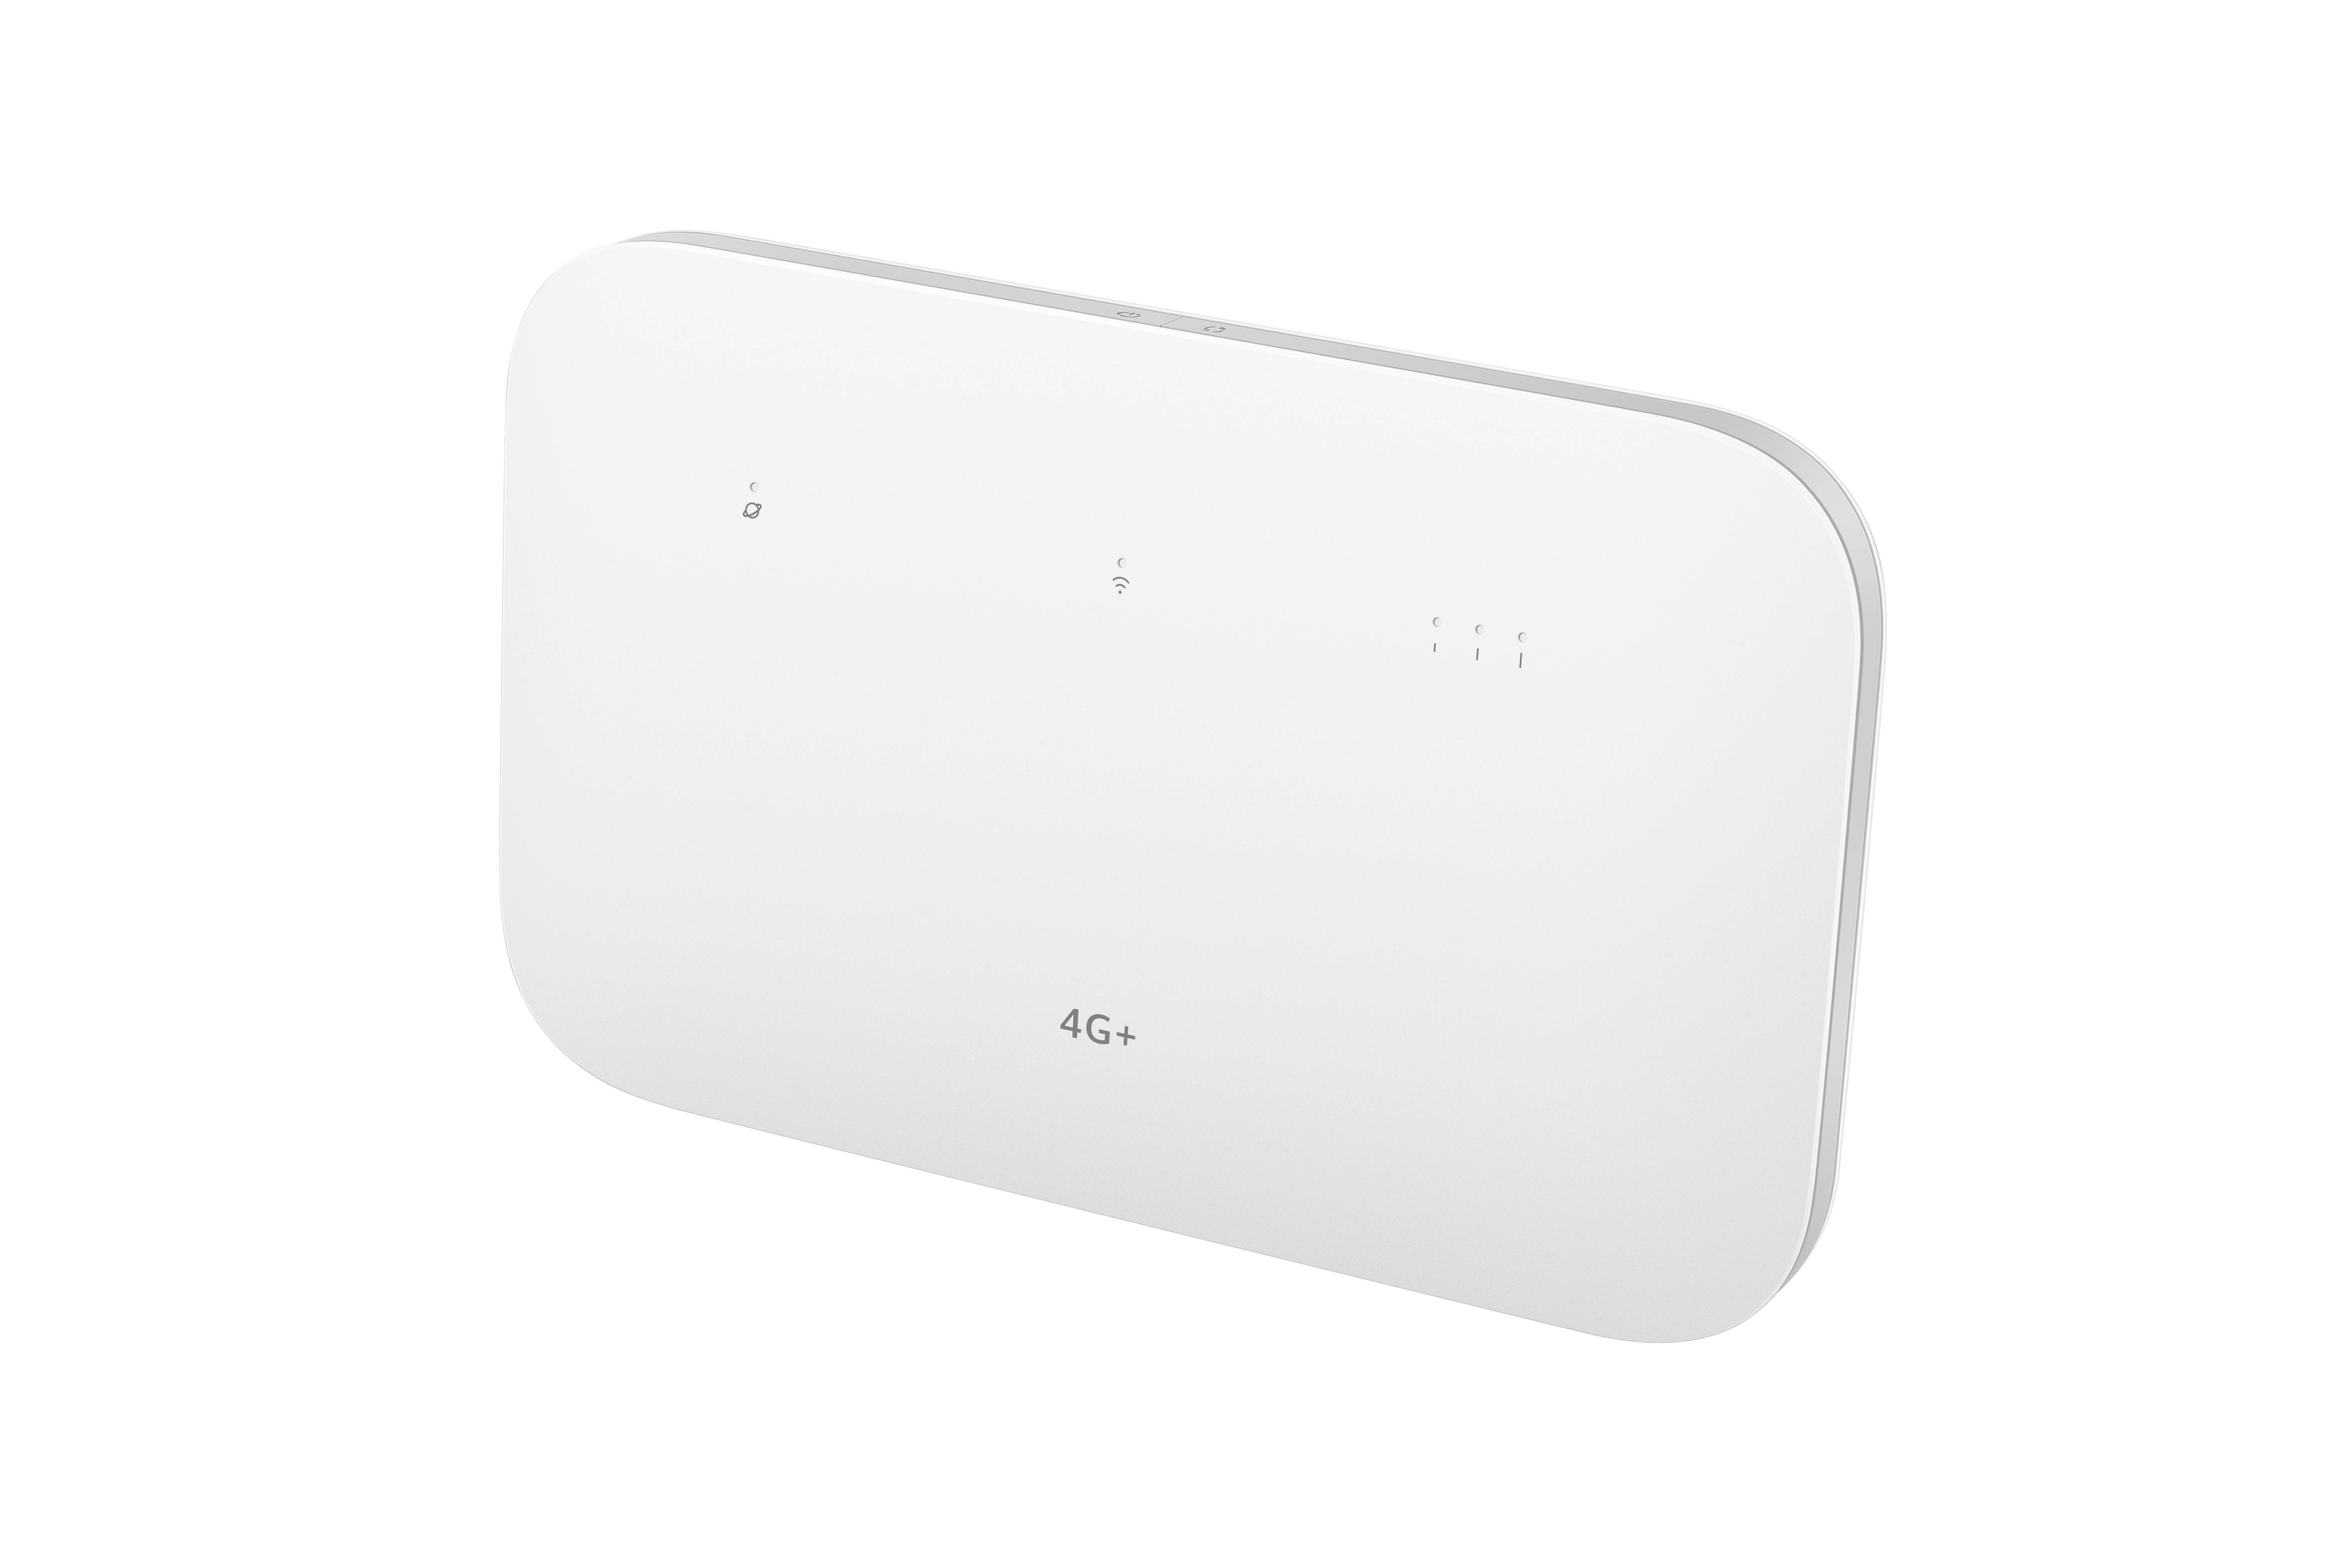 Huawei 4G LTE CAT 6+ Wi-Fi Router B622-335